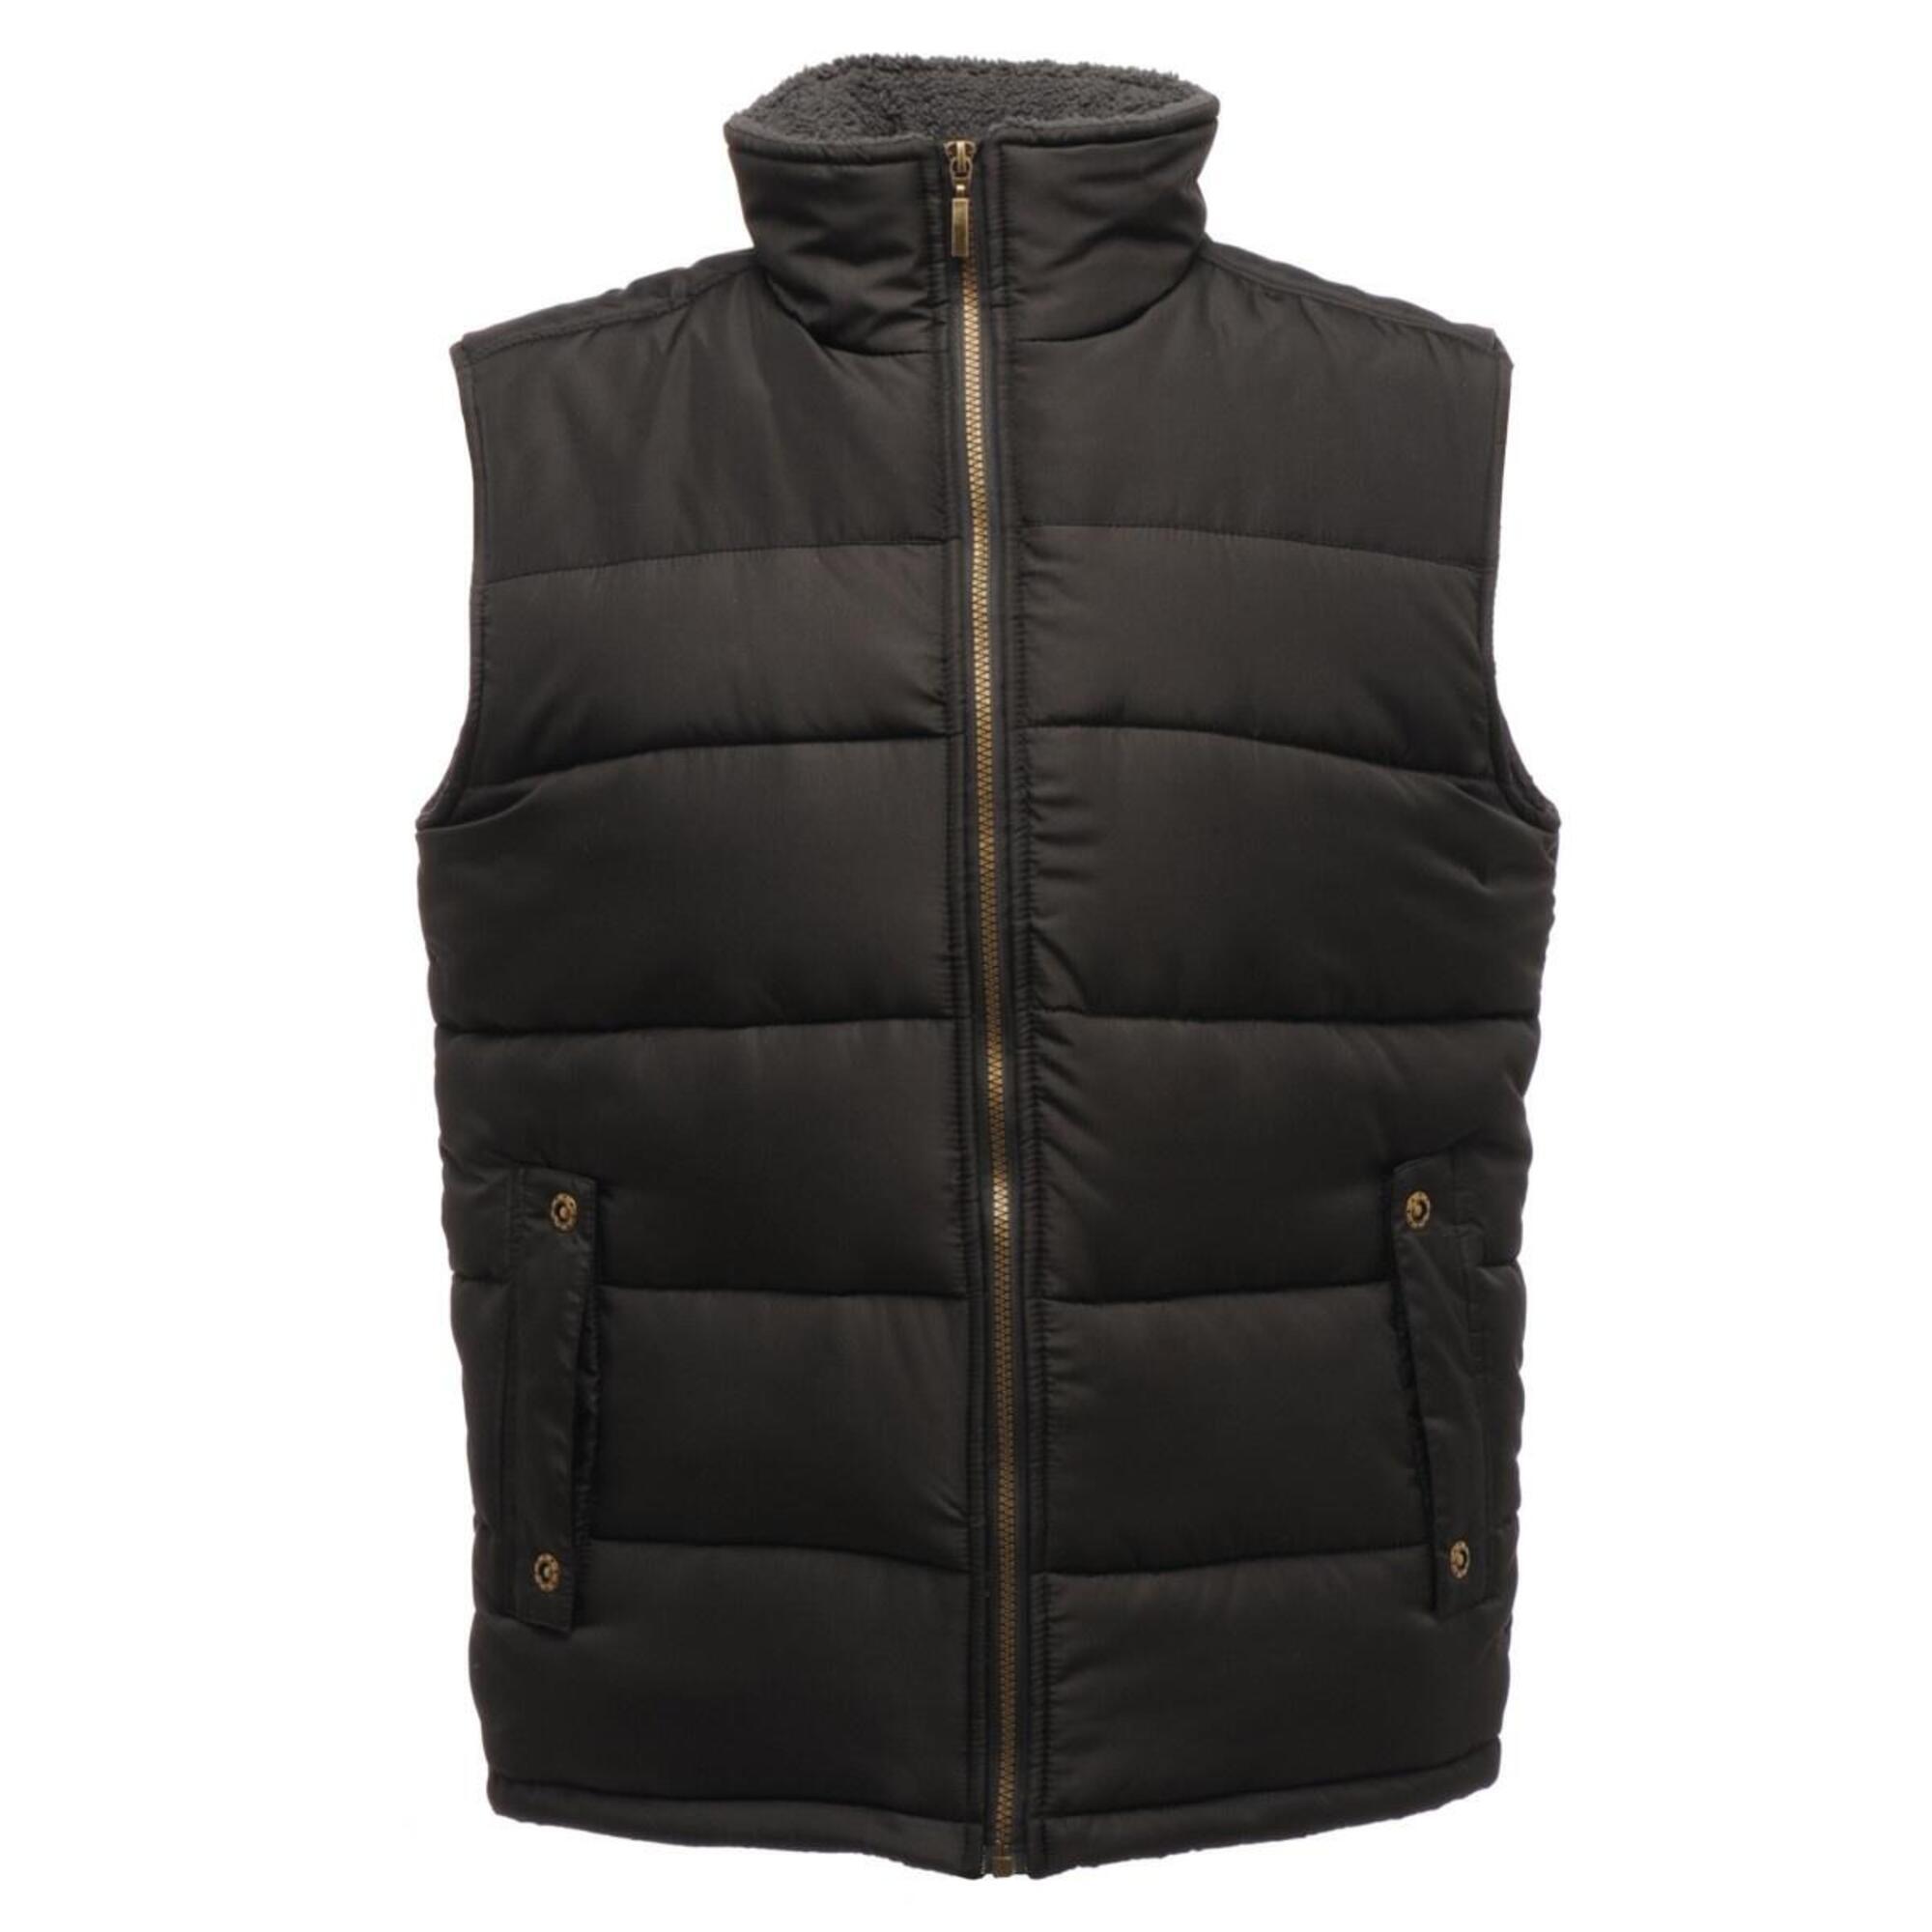 Mens Standout Altoona Insulated Bodywarmer Jacket (Black) 1/4